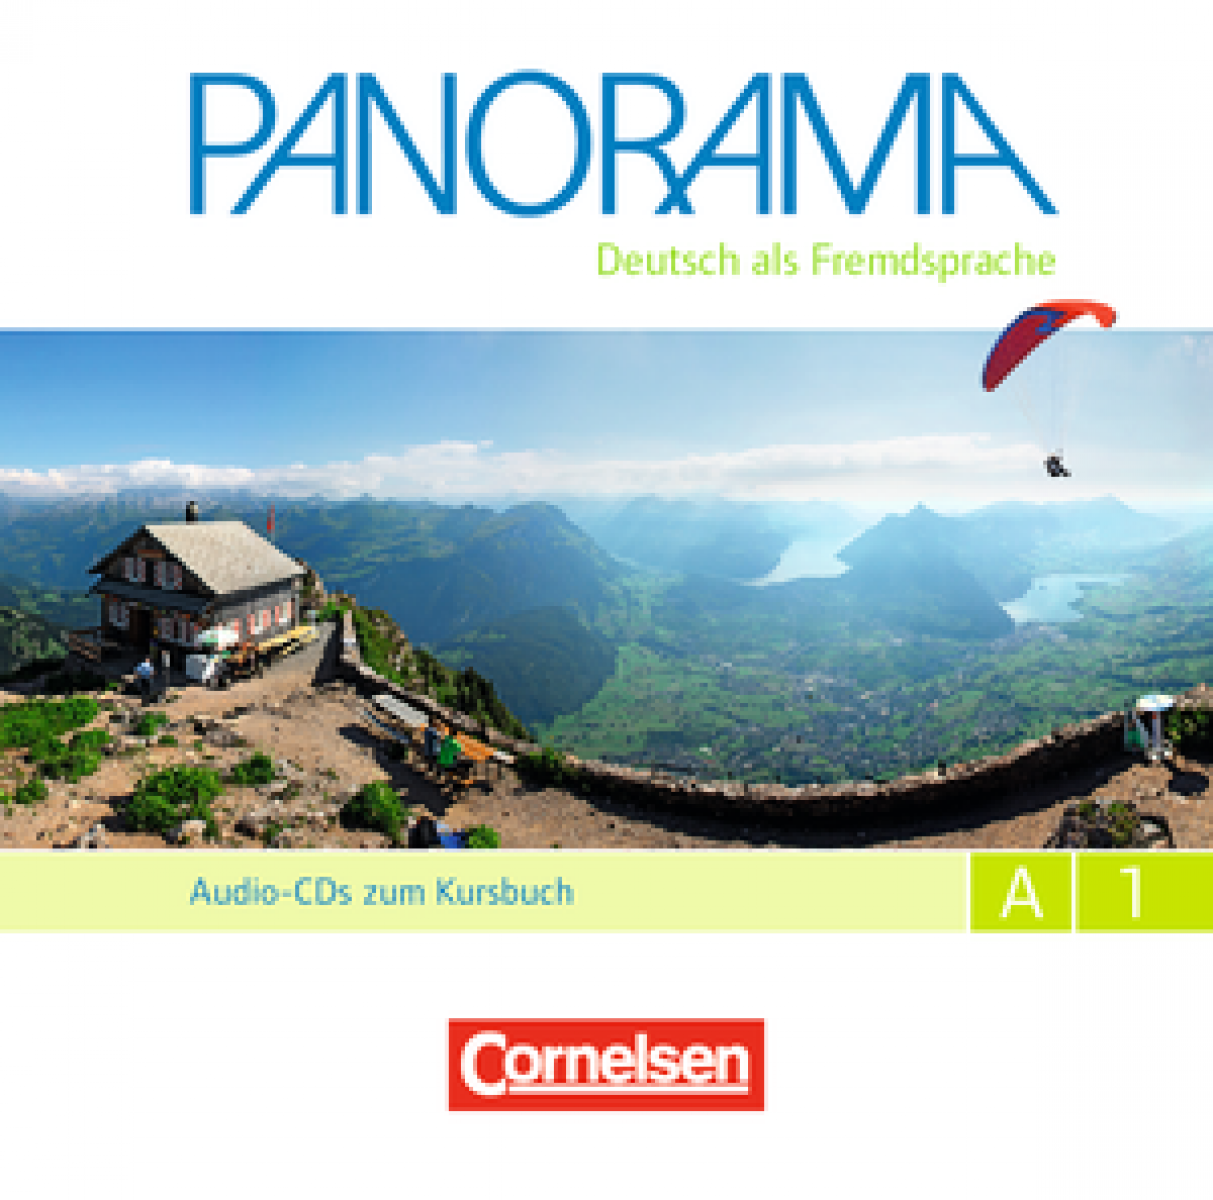 Finster A. Panorama: A1: Gesamtband 